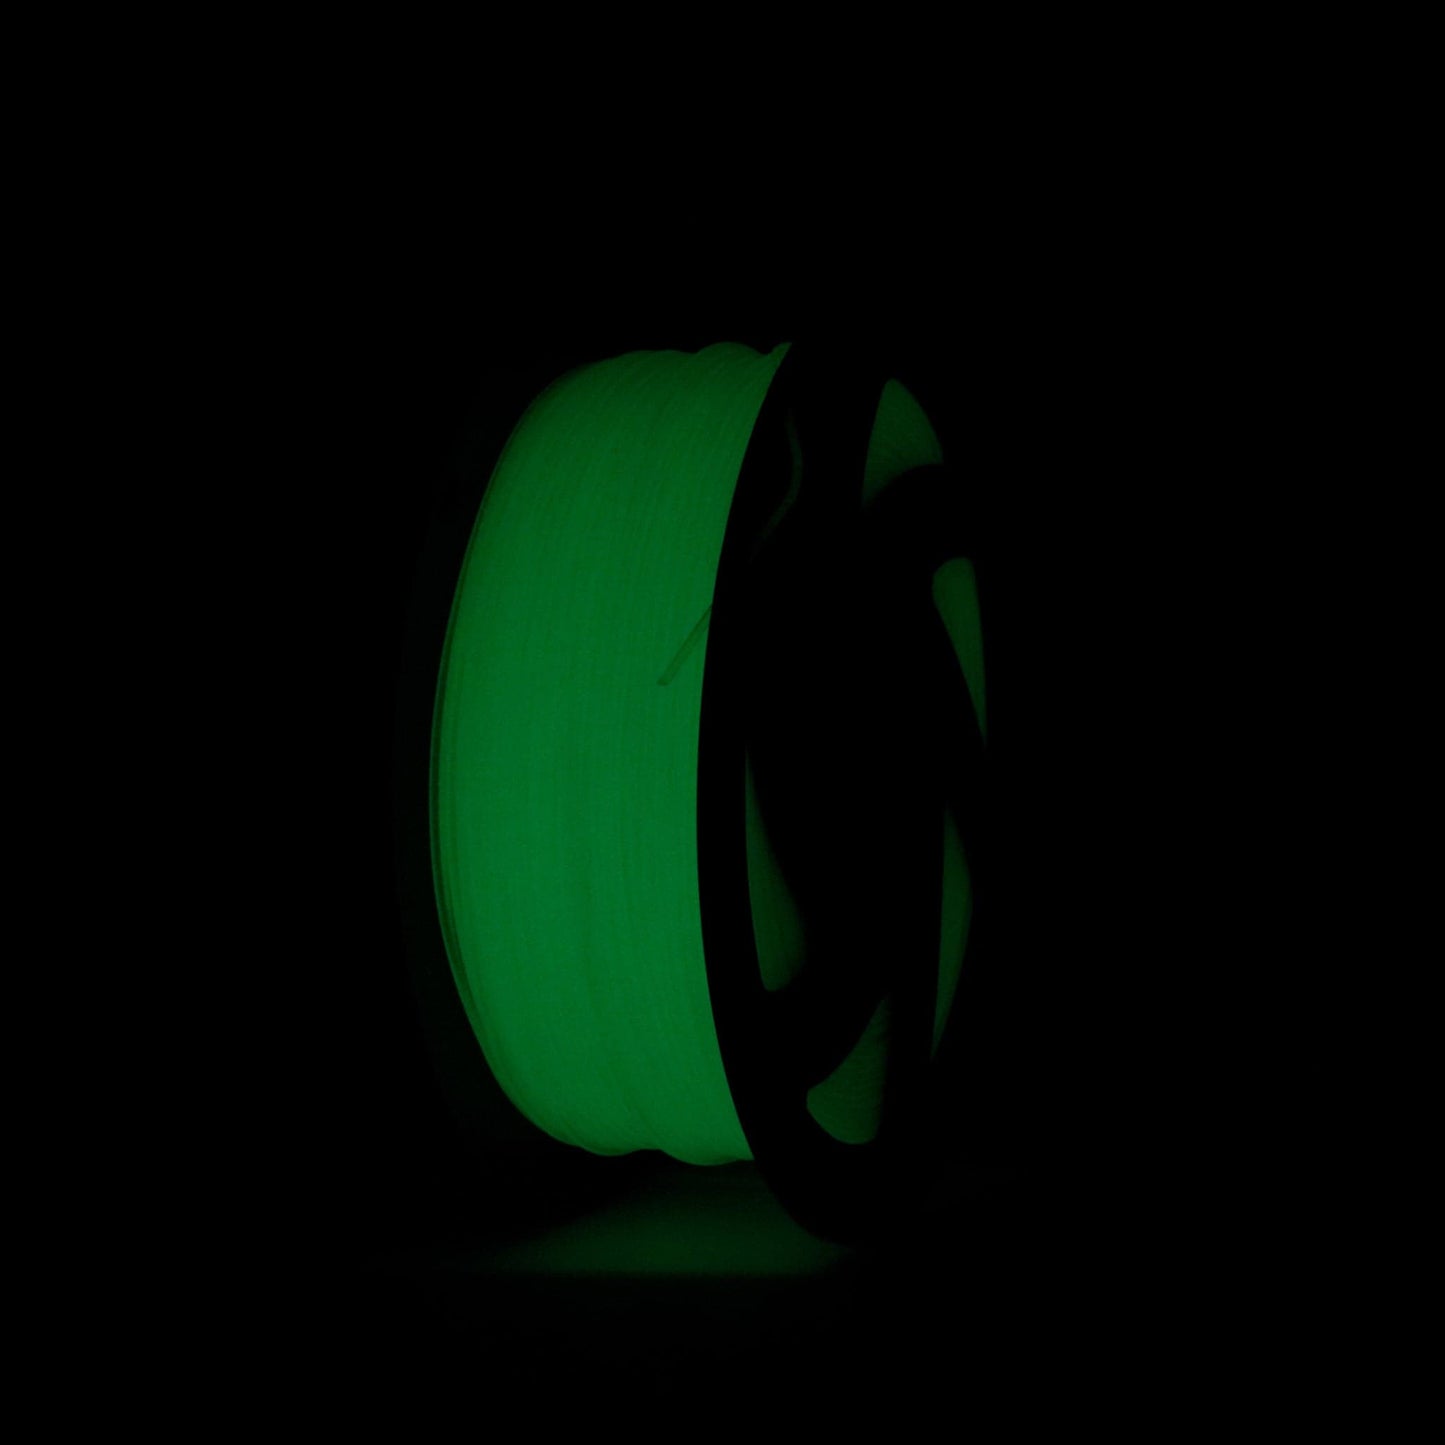 Green Glow PETG Filament 1.75mm shown in the dark